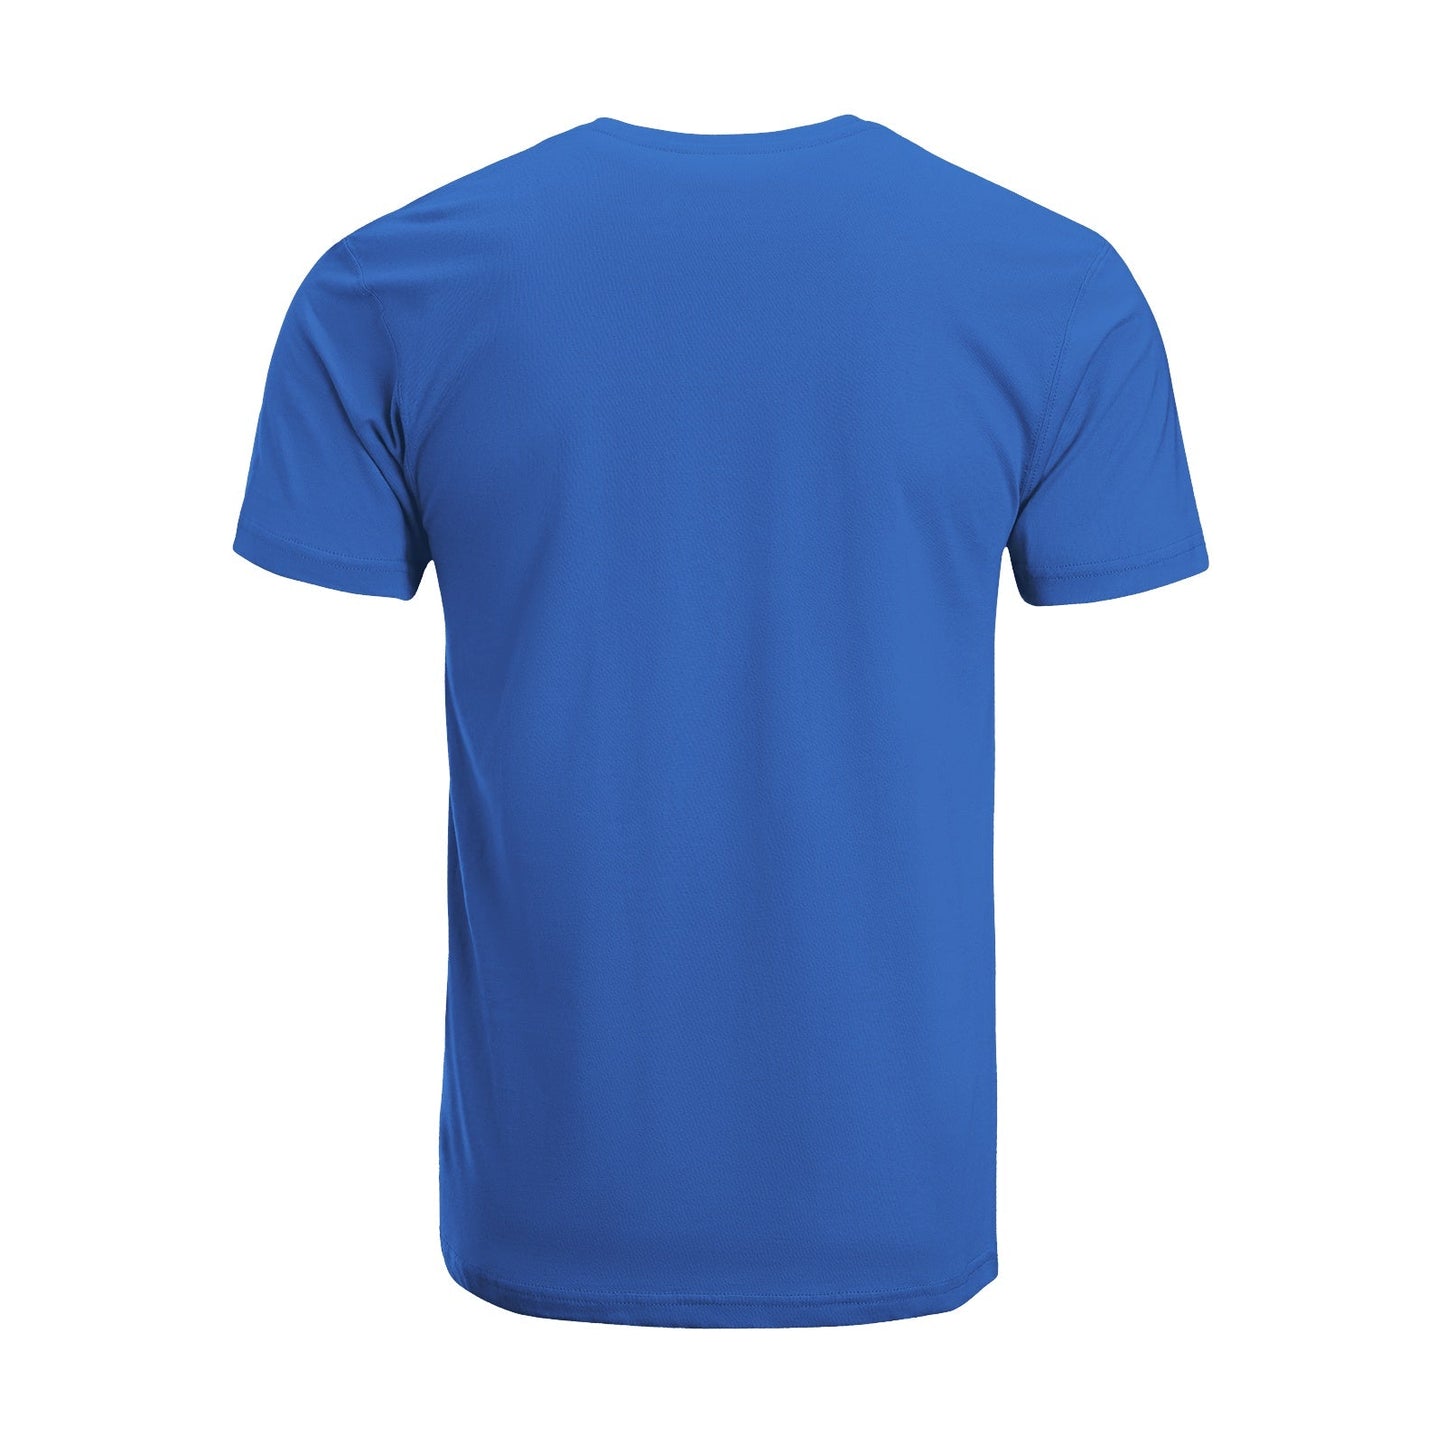 Unisex Short Sleeve Crew Neck Cotton Jersey T-Shirt MOM 22